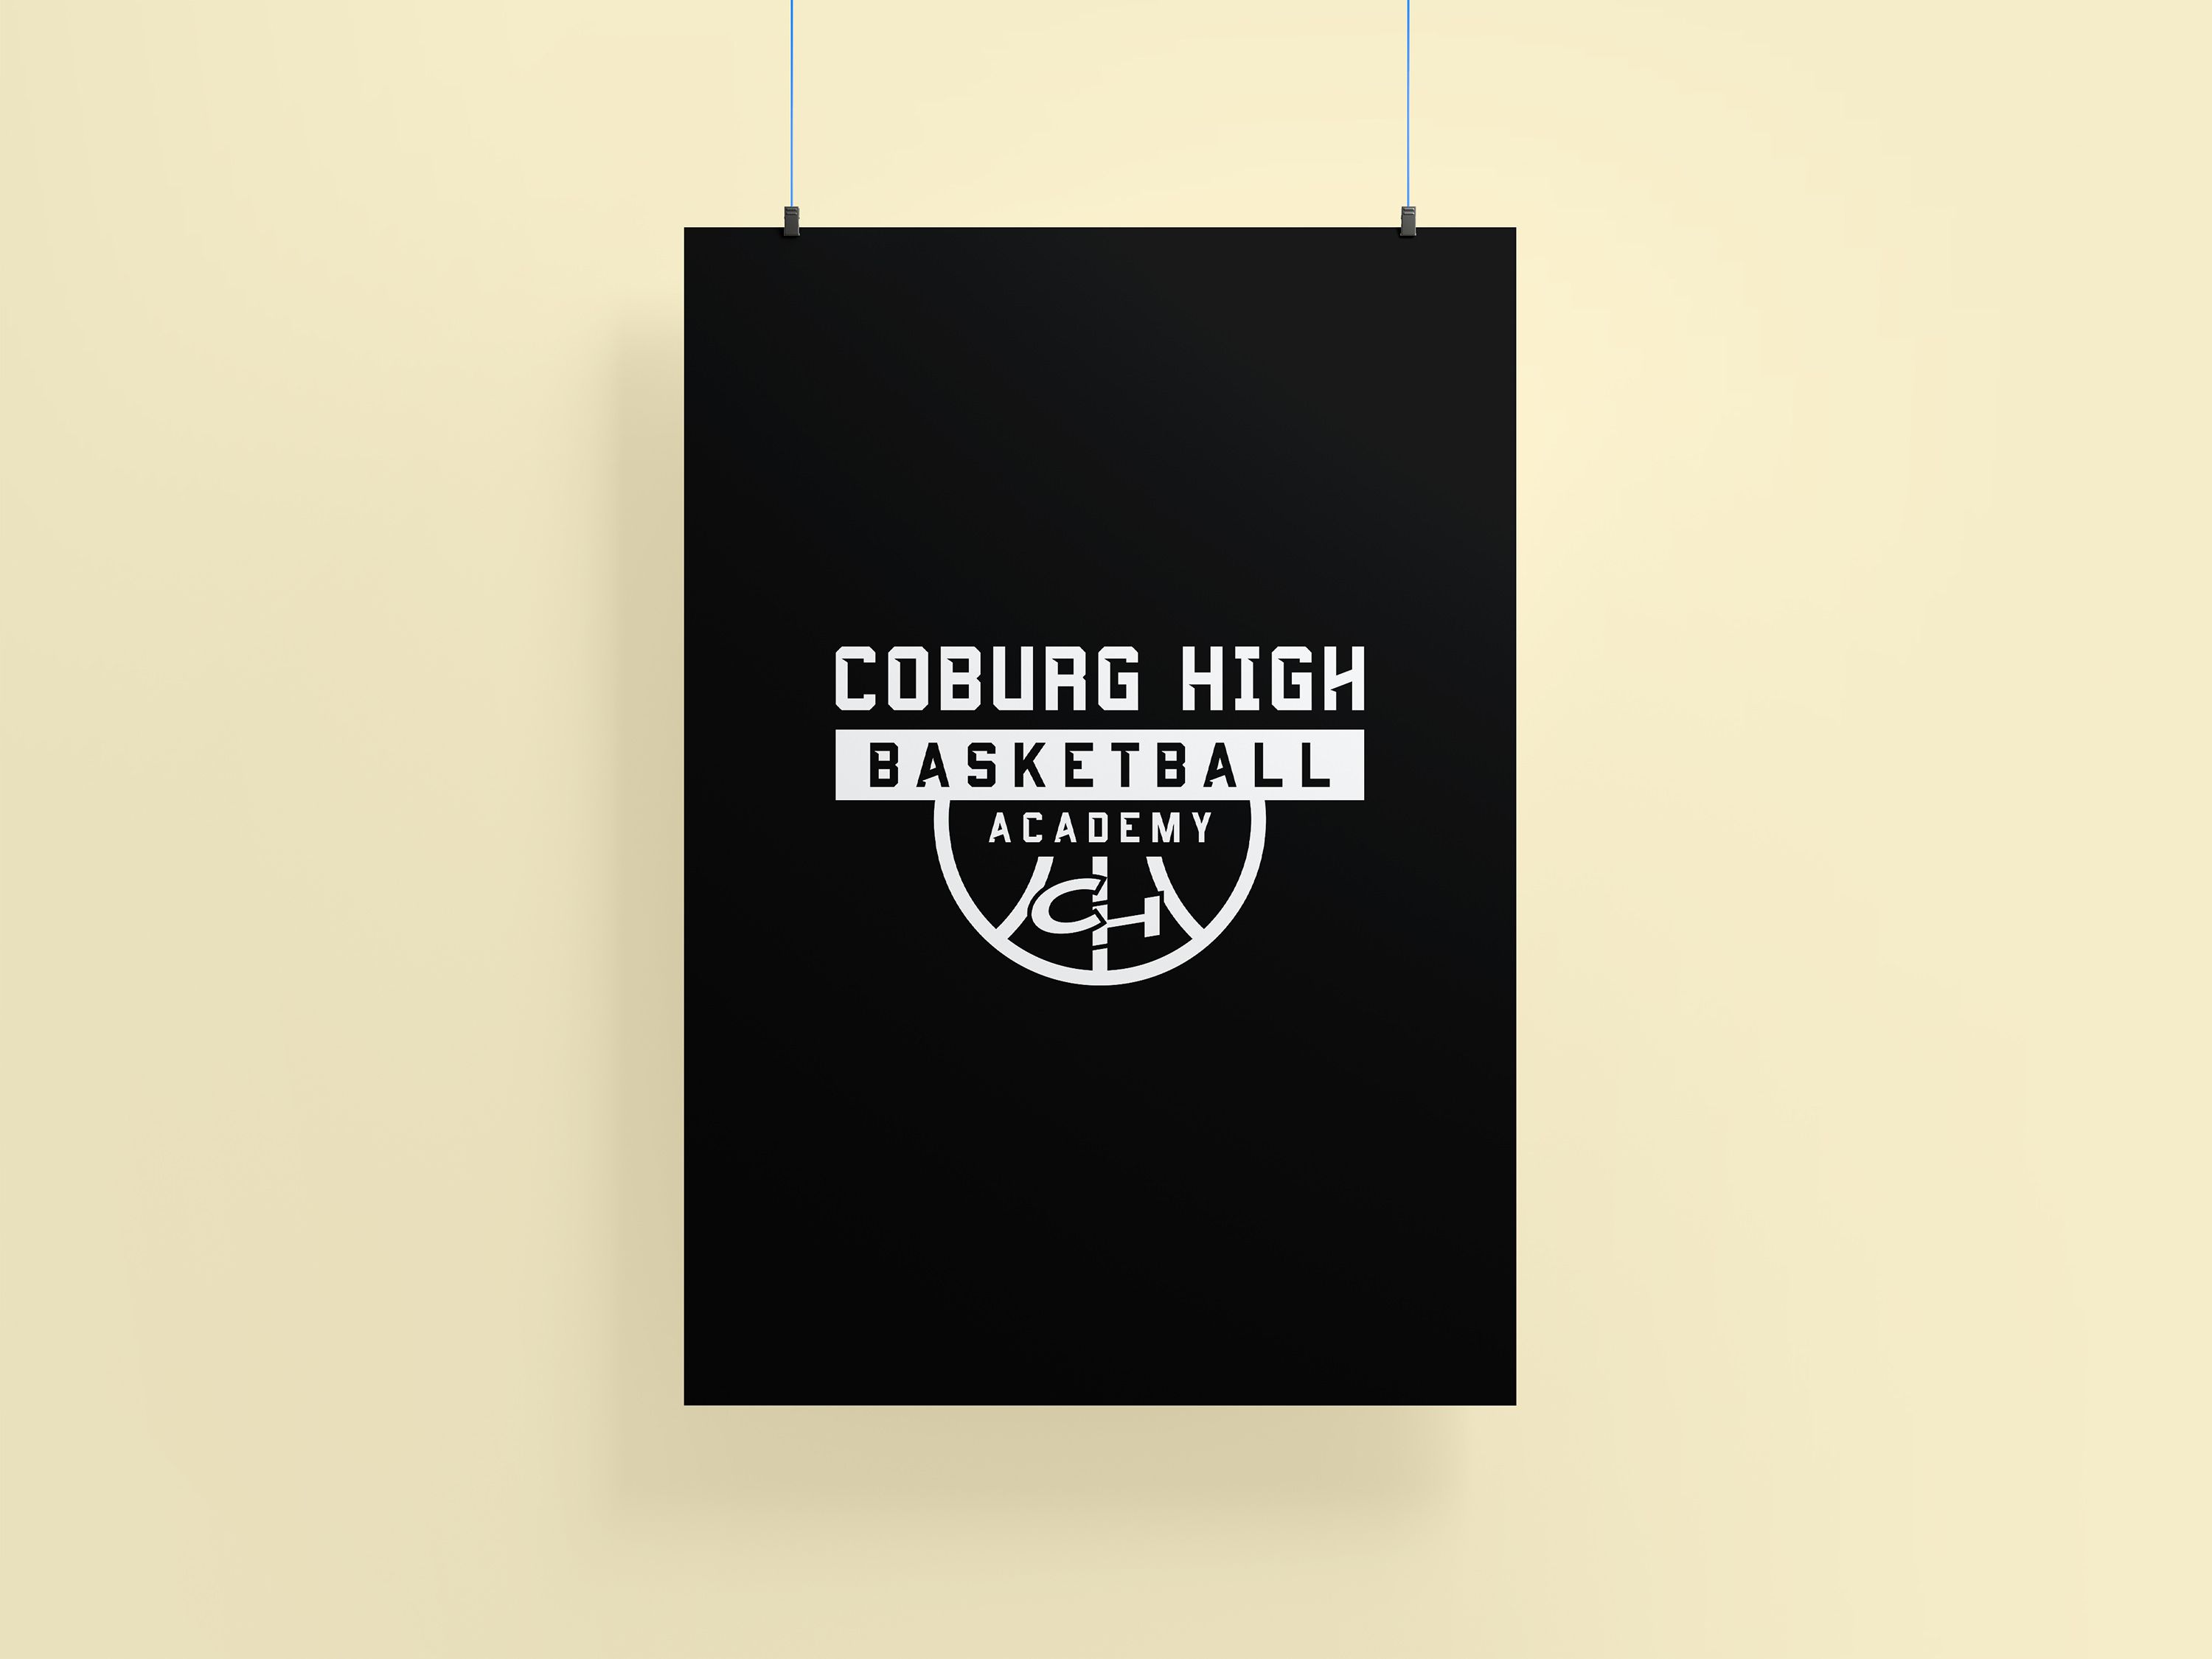 Coburg High Basketball Academy White logo version